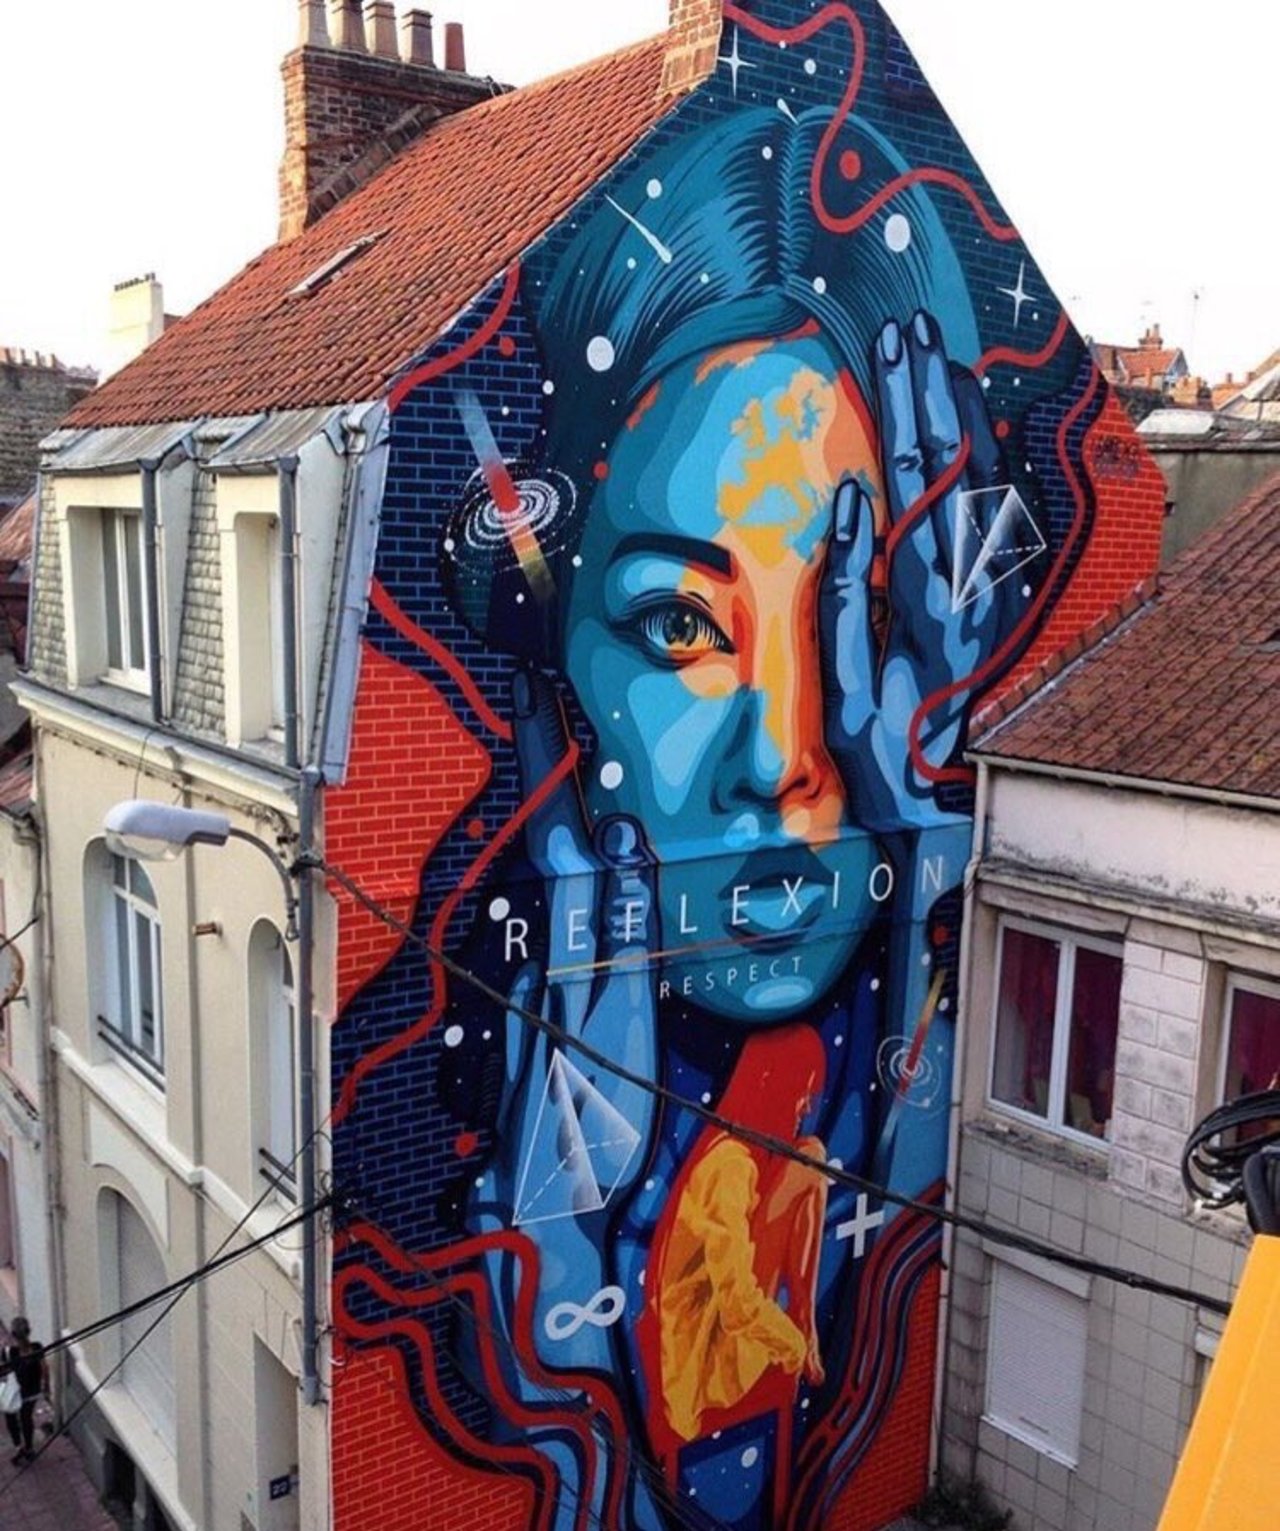 #mural by Dourone #France #streetart #art #graffiti https://t.co/5ZUGJyOros